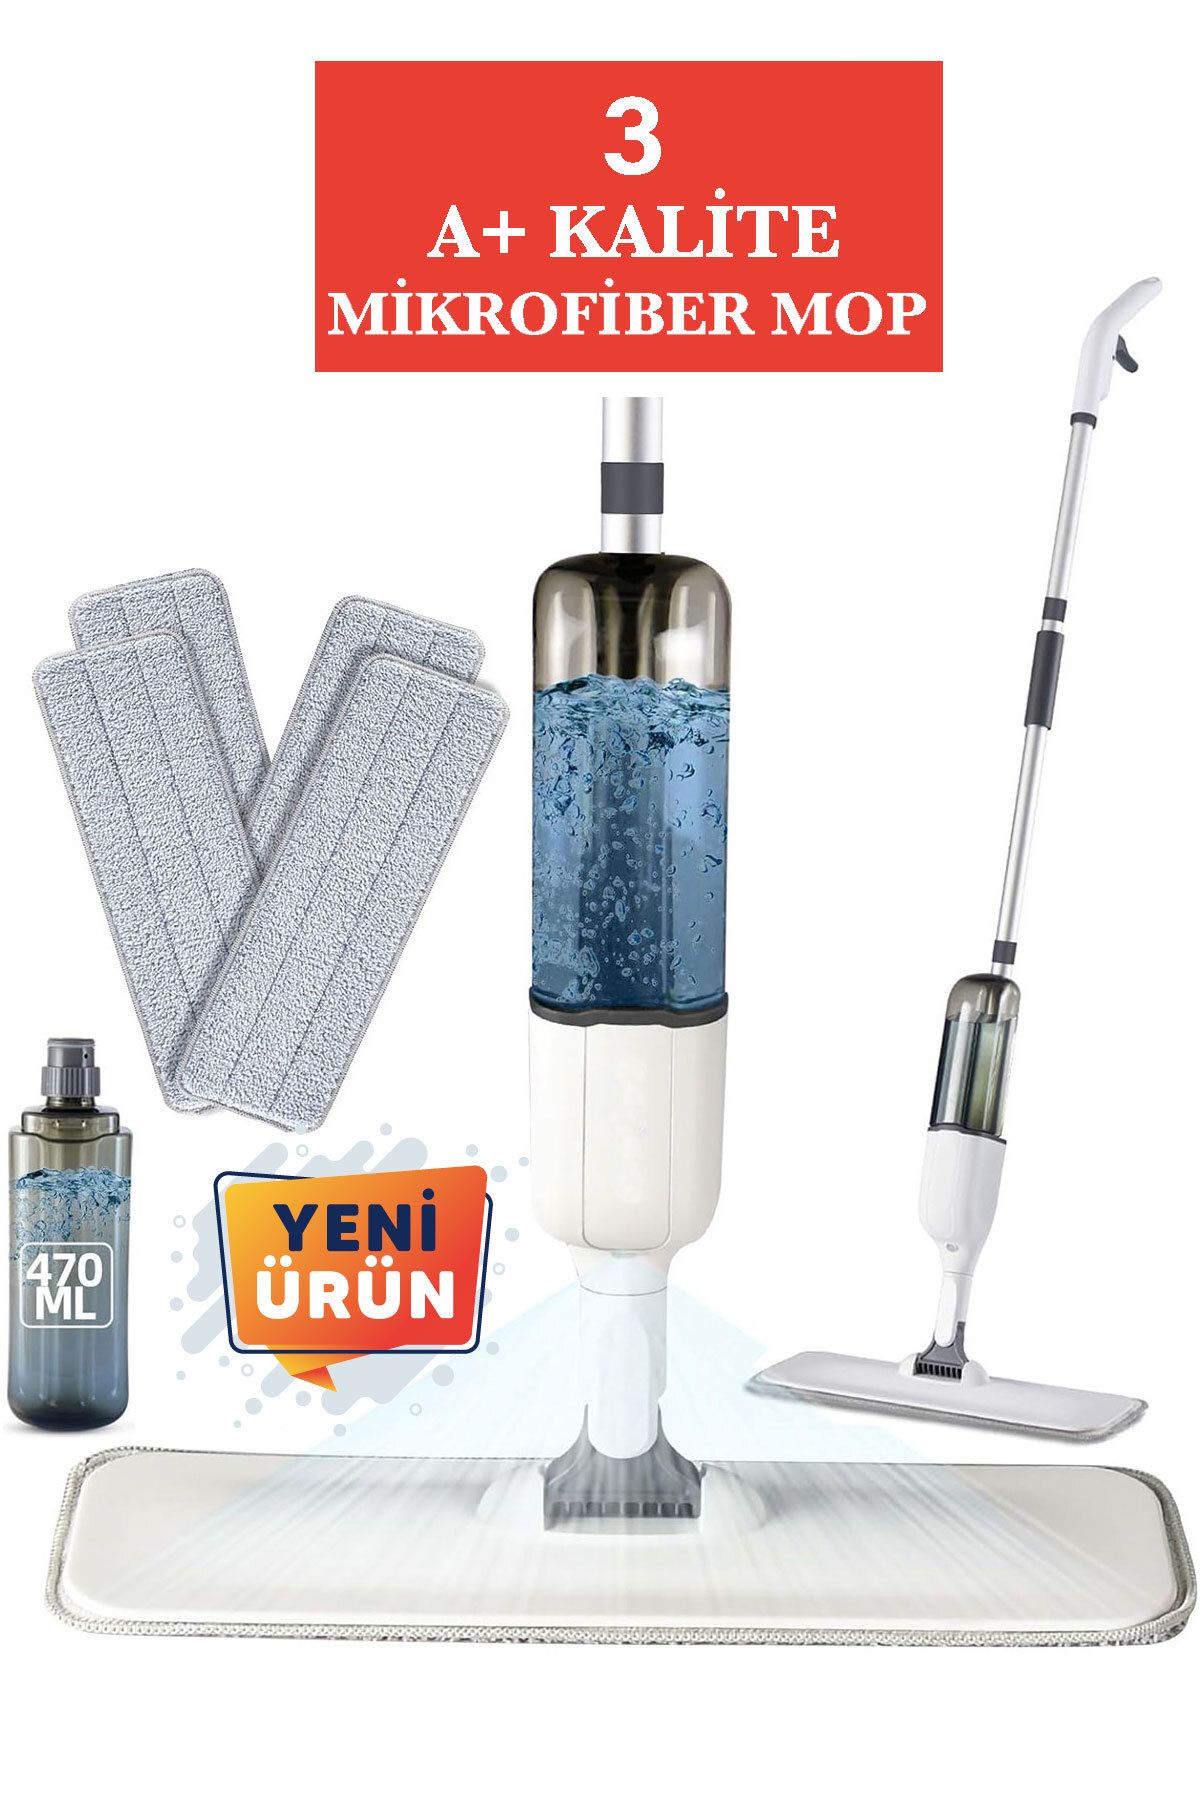 Egonex Sprey Mop Su Hazneli Pratik Temizlik Seti 3 Adet Mikrofiber Spray Mop